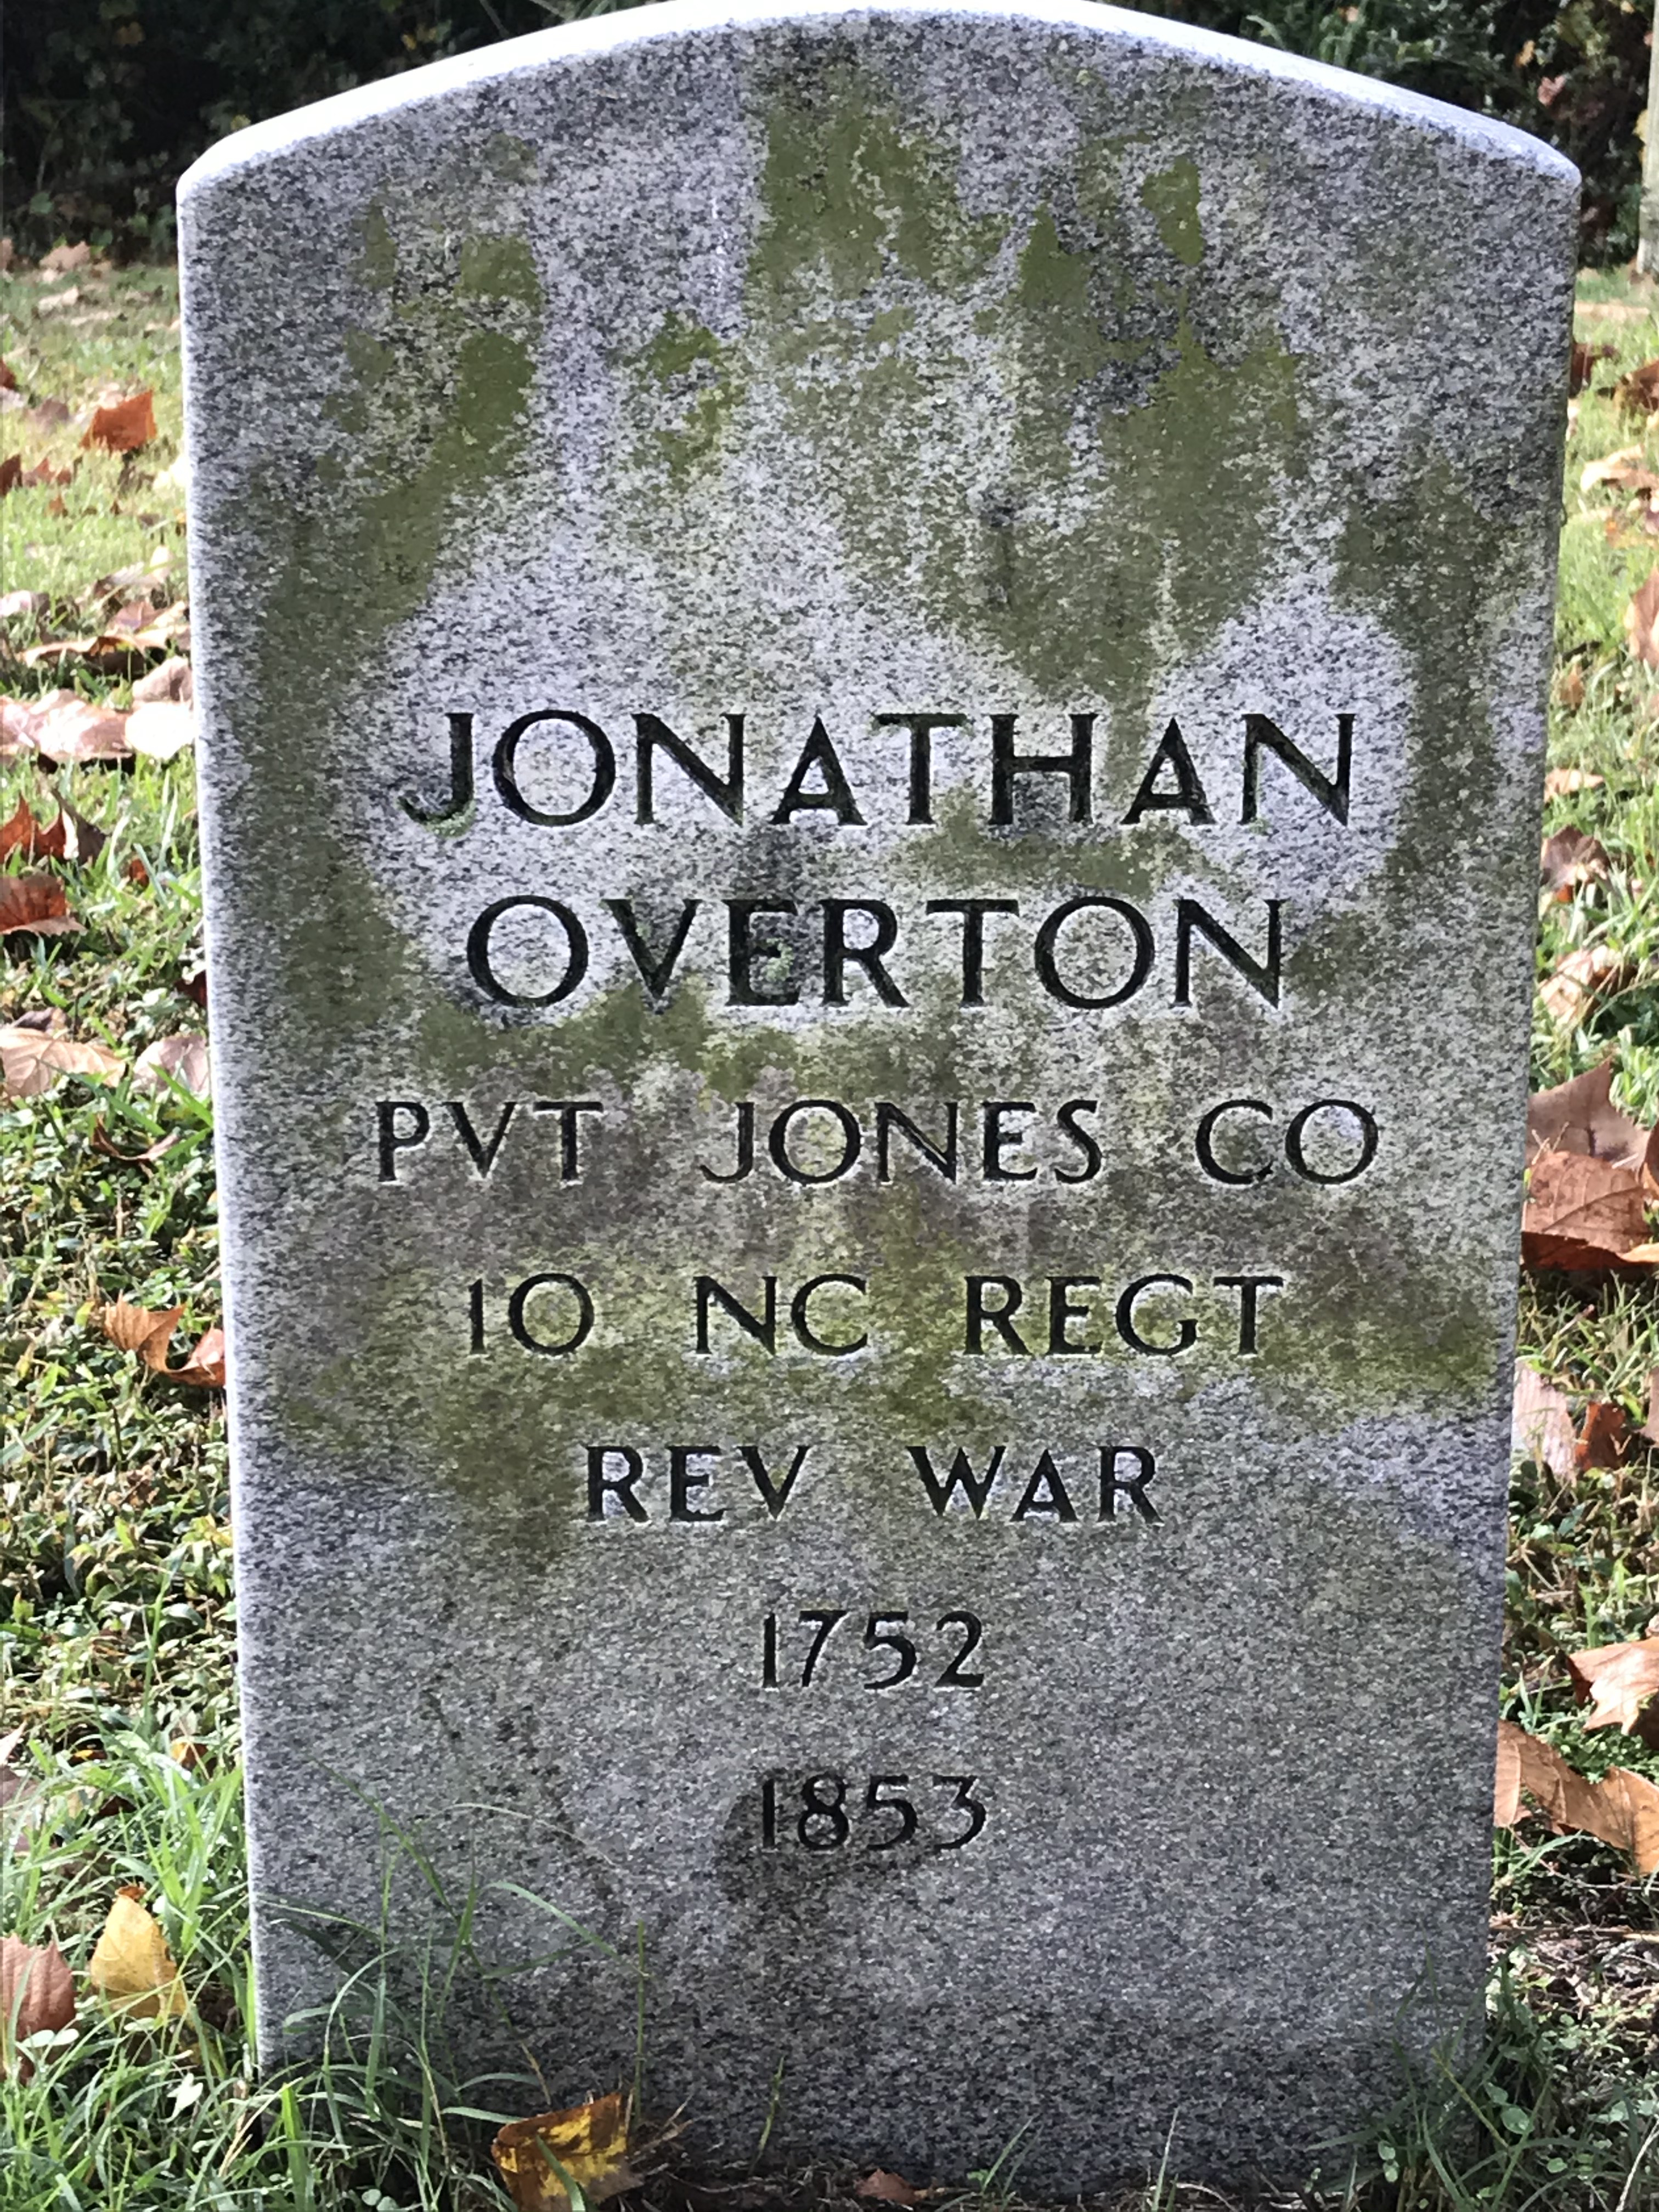 Headstone of Private Jonathan Overton. Company to NC Regiment Revolutionary War